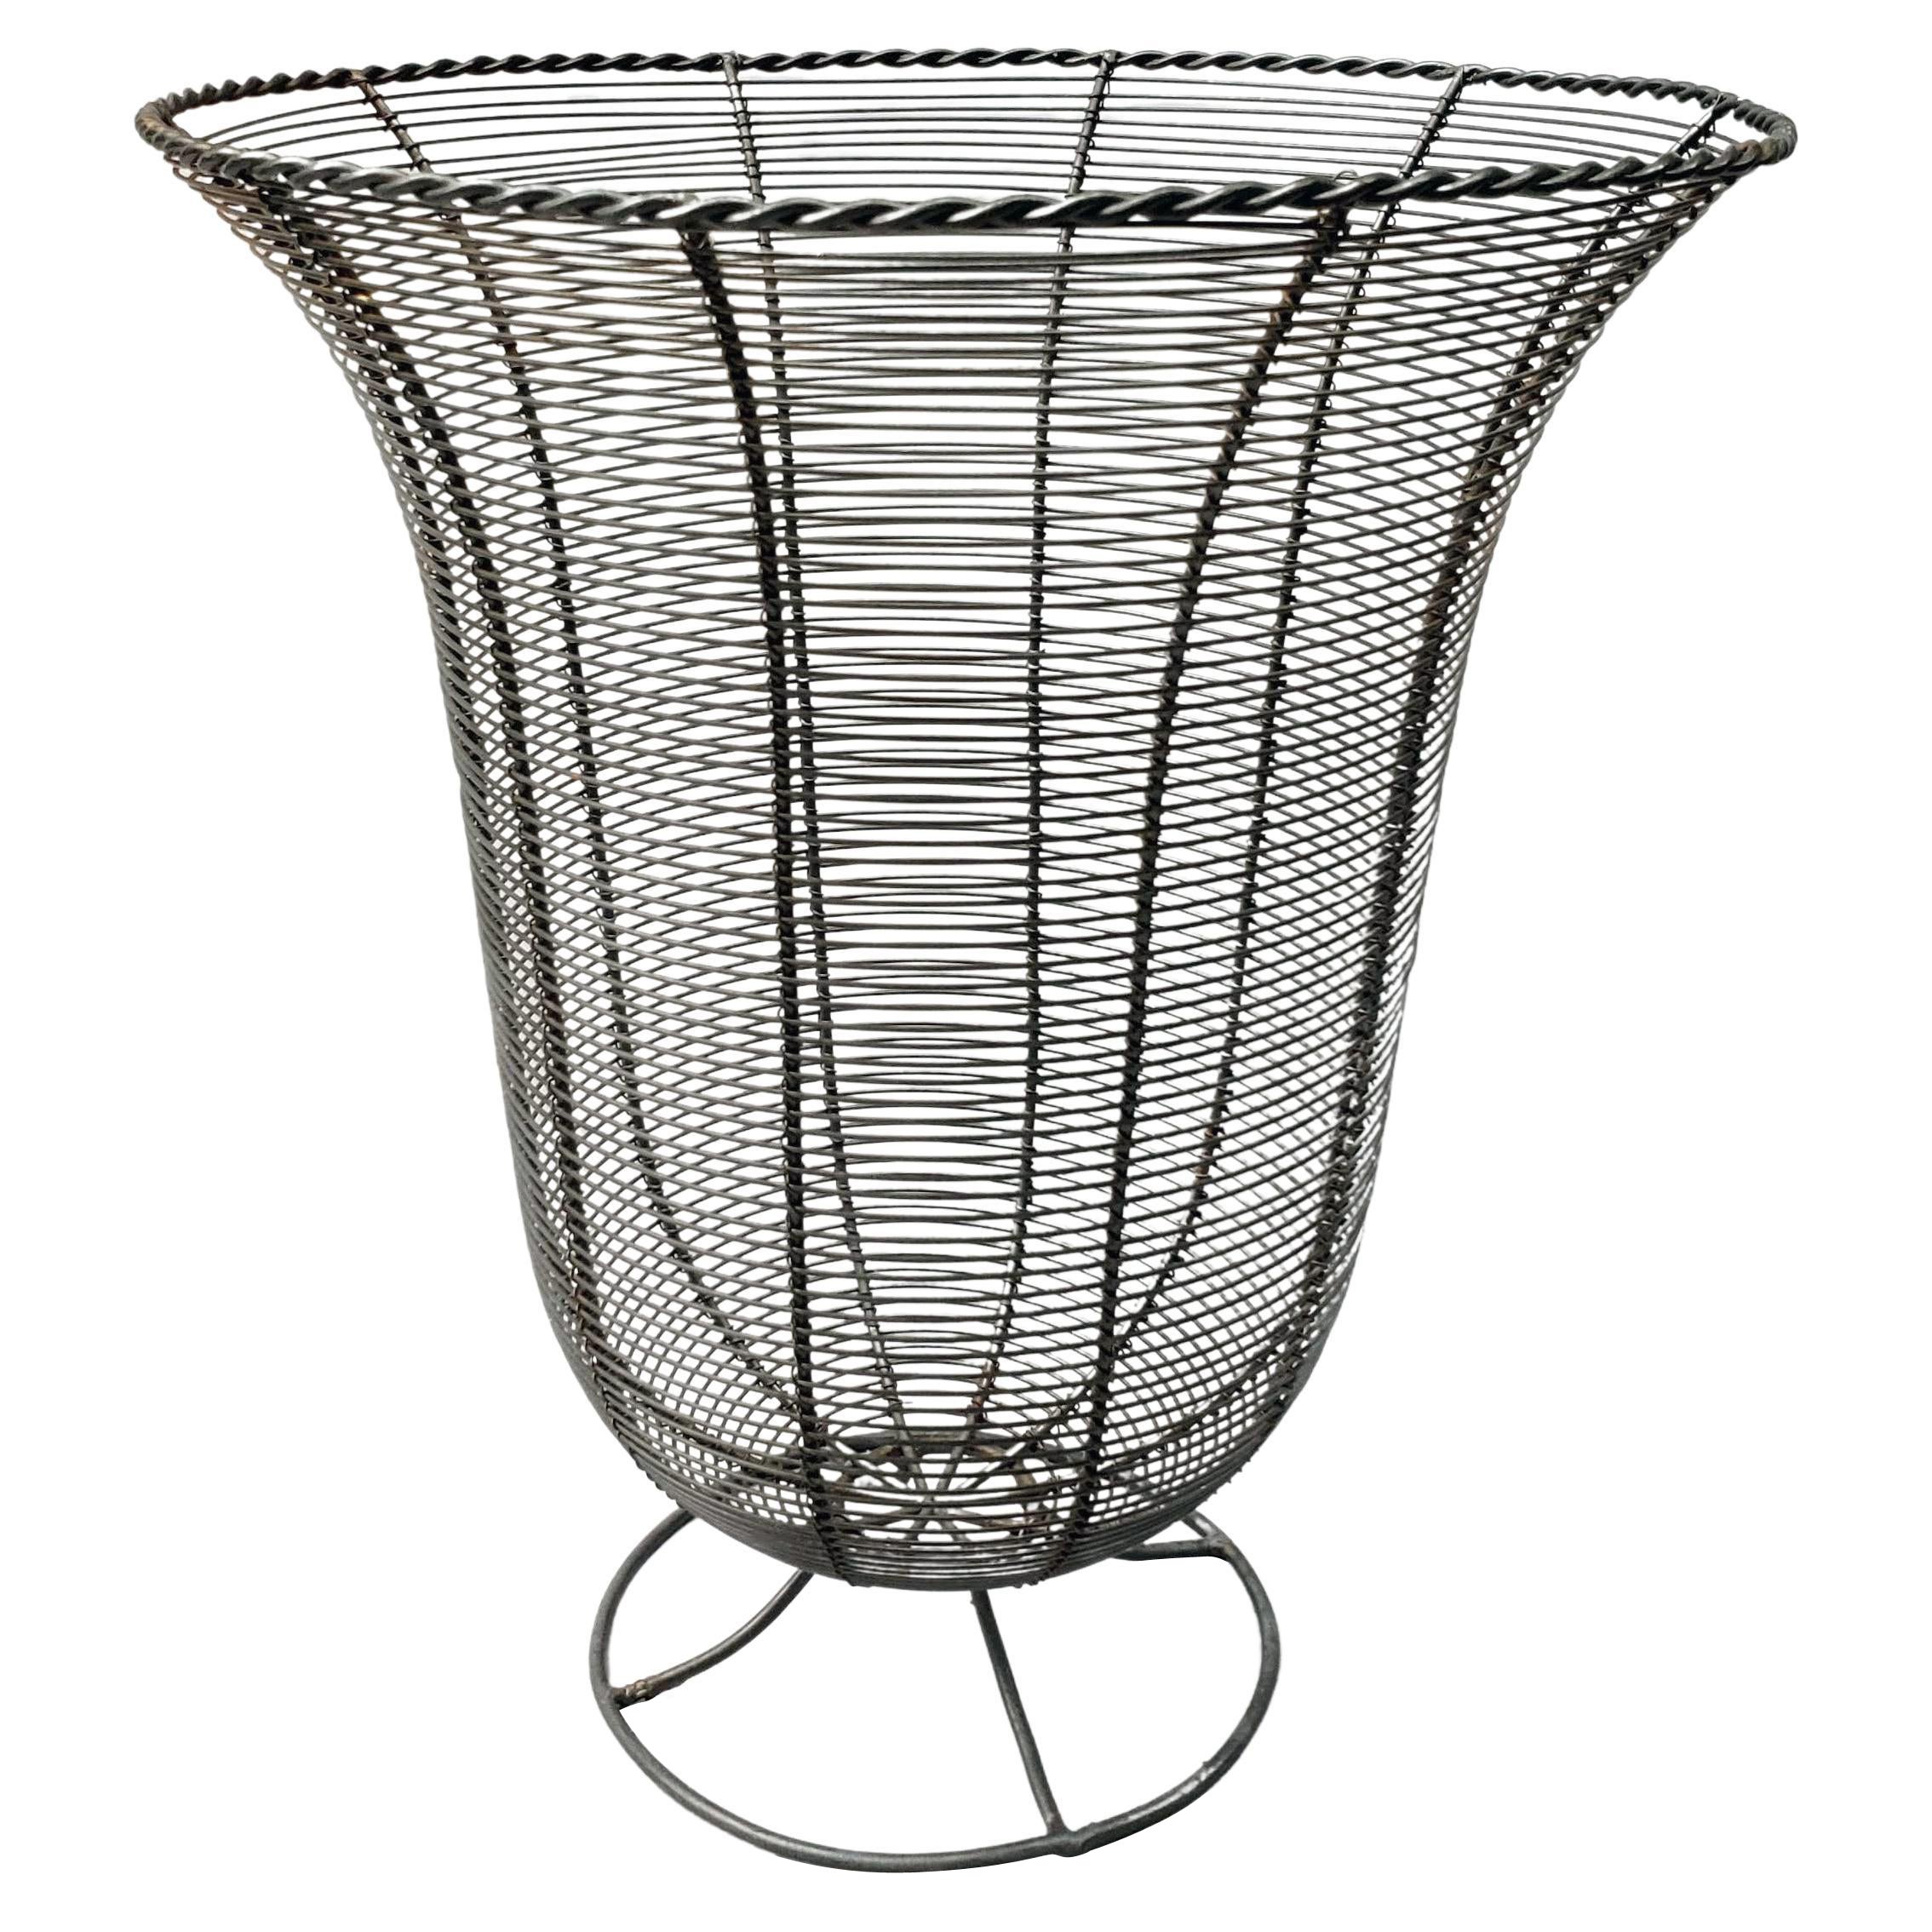 Midcentury 1940s American Wire Waste Basket